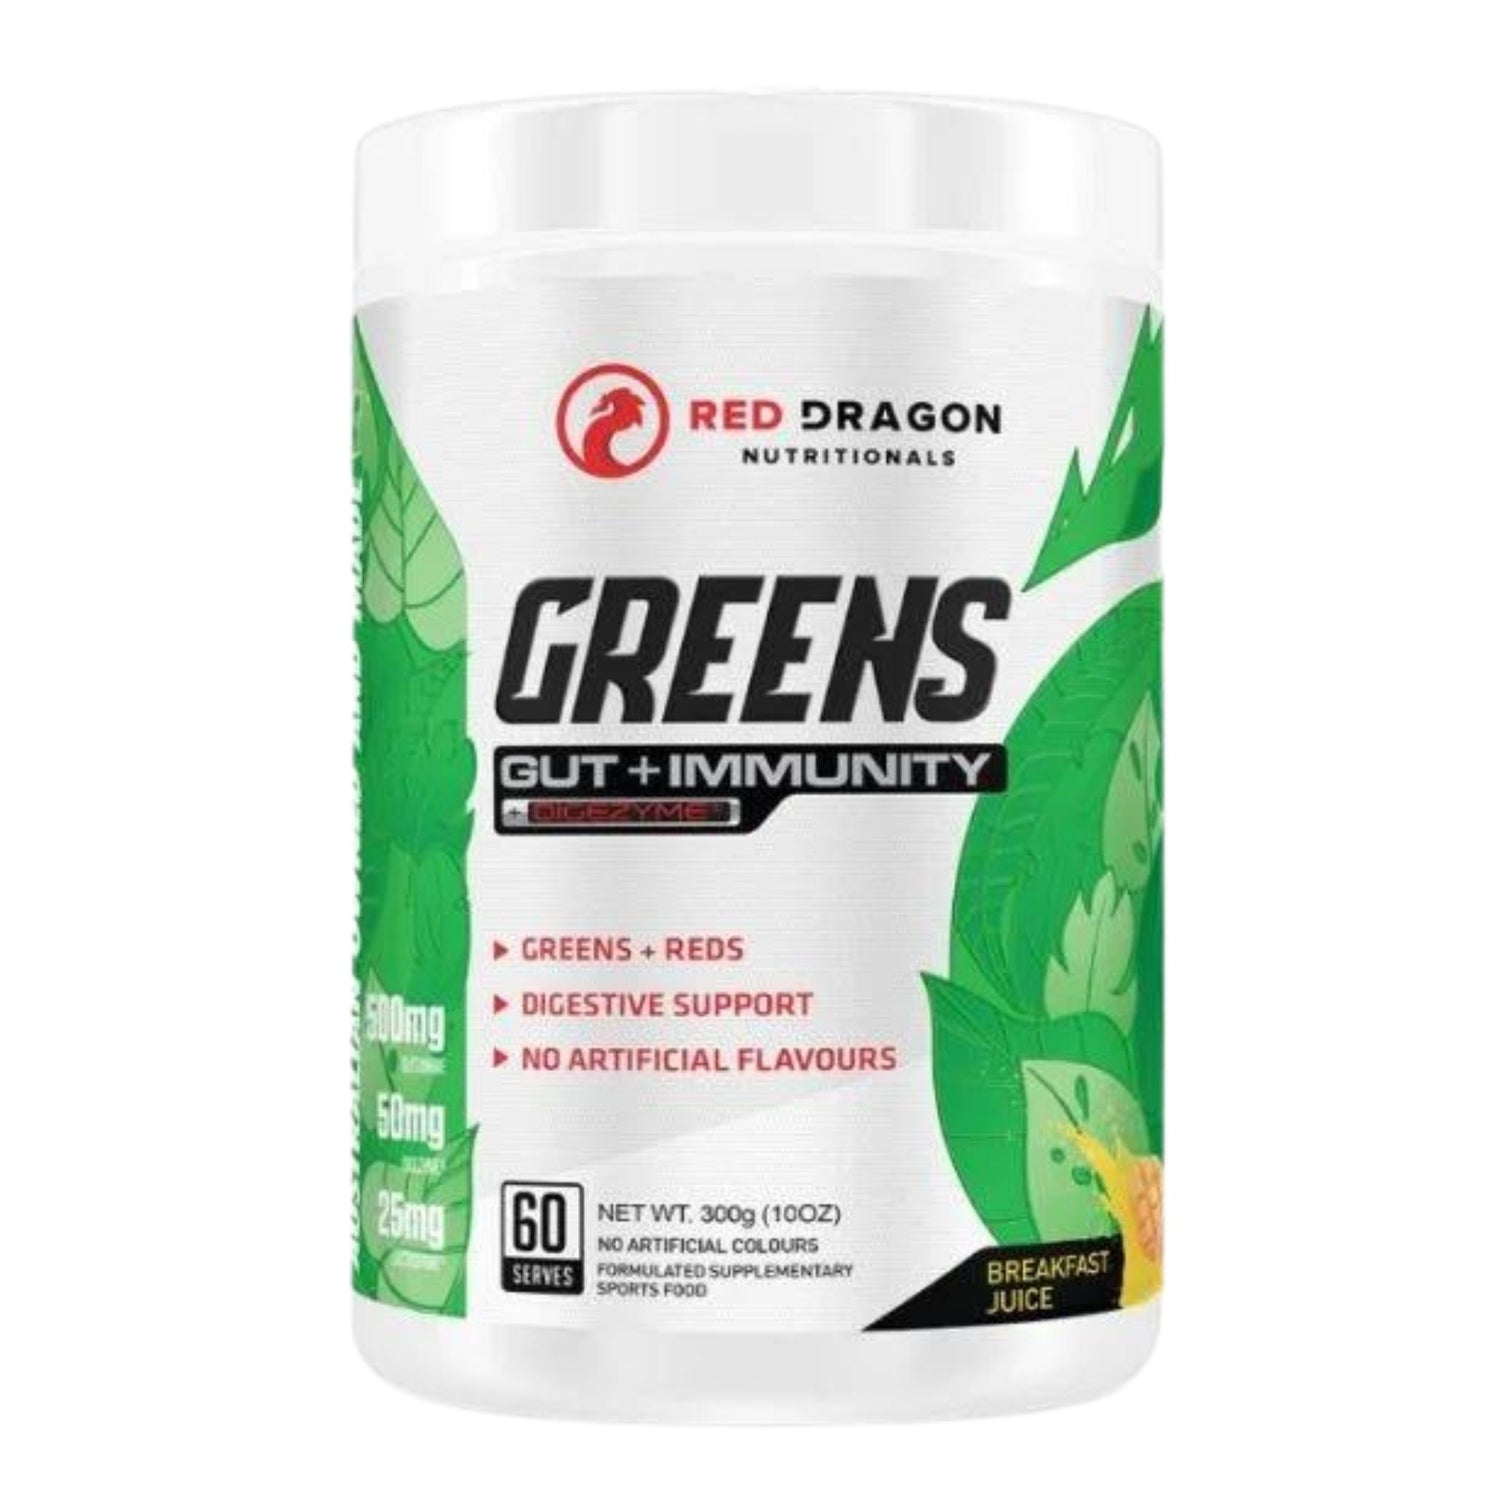 Red Dragon Greens Gut plus Immunity Greens Powder